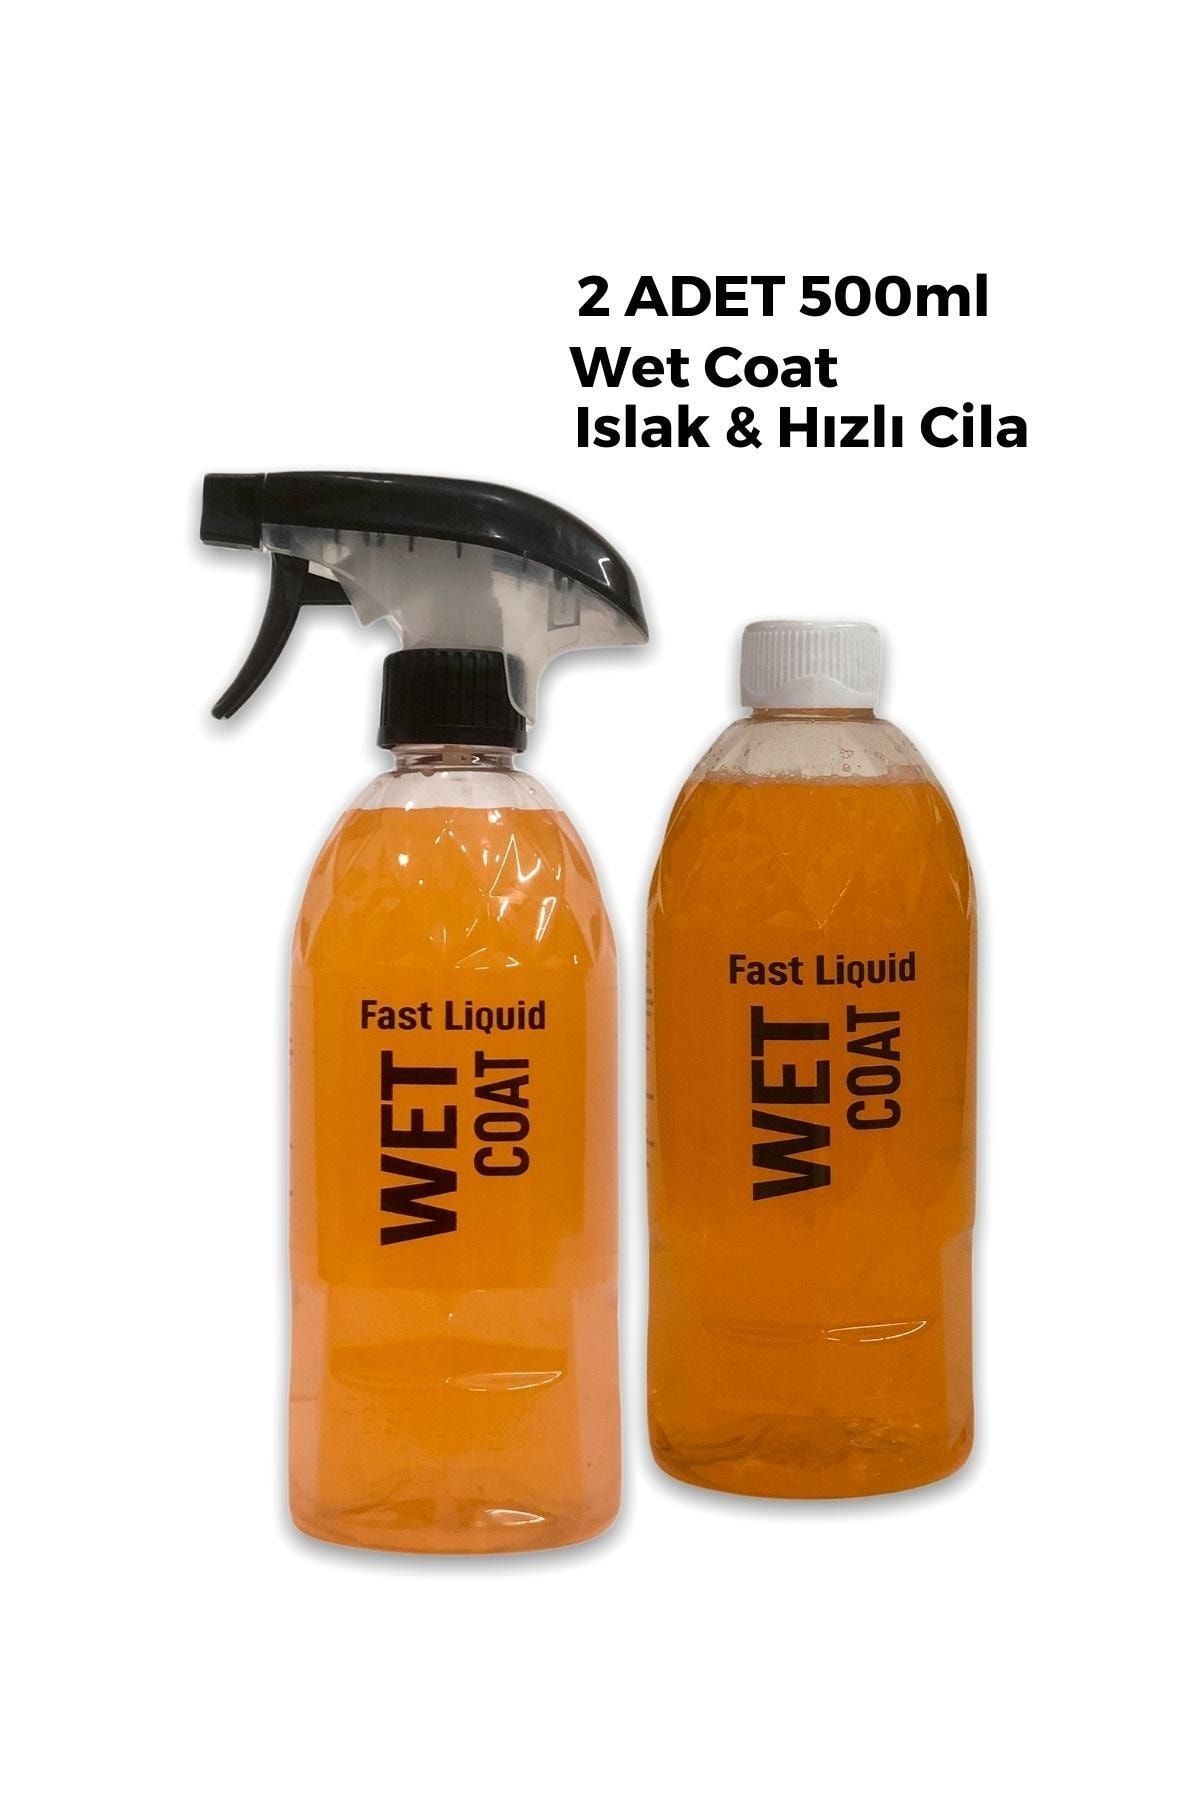 Fast Liquid Wet Coat 500 ml Seramik Katkılı Hızlı Cila Wax Nano Boya Koruma Islak Cila Otomobil Cilası 2 Adet